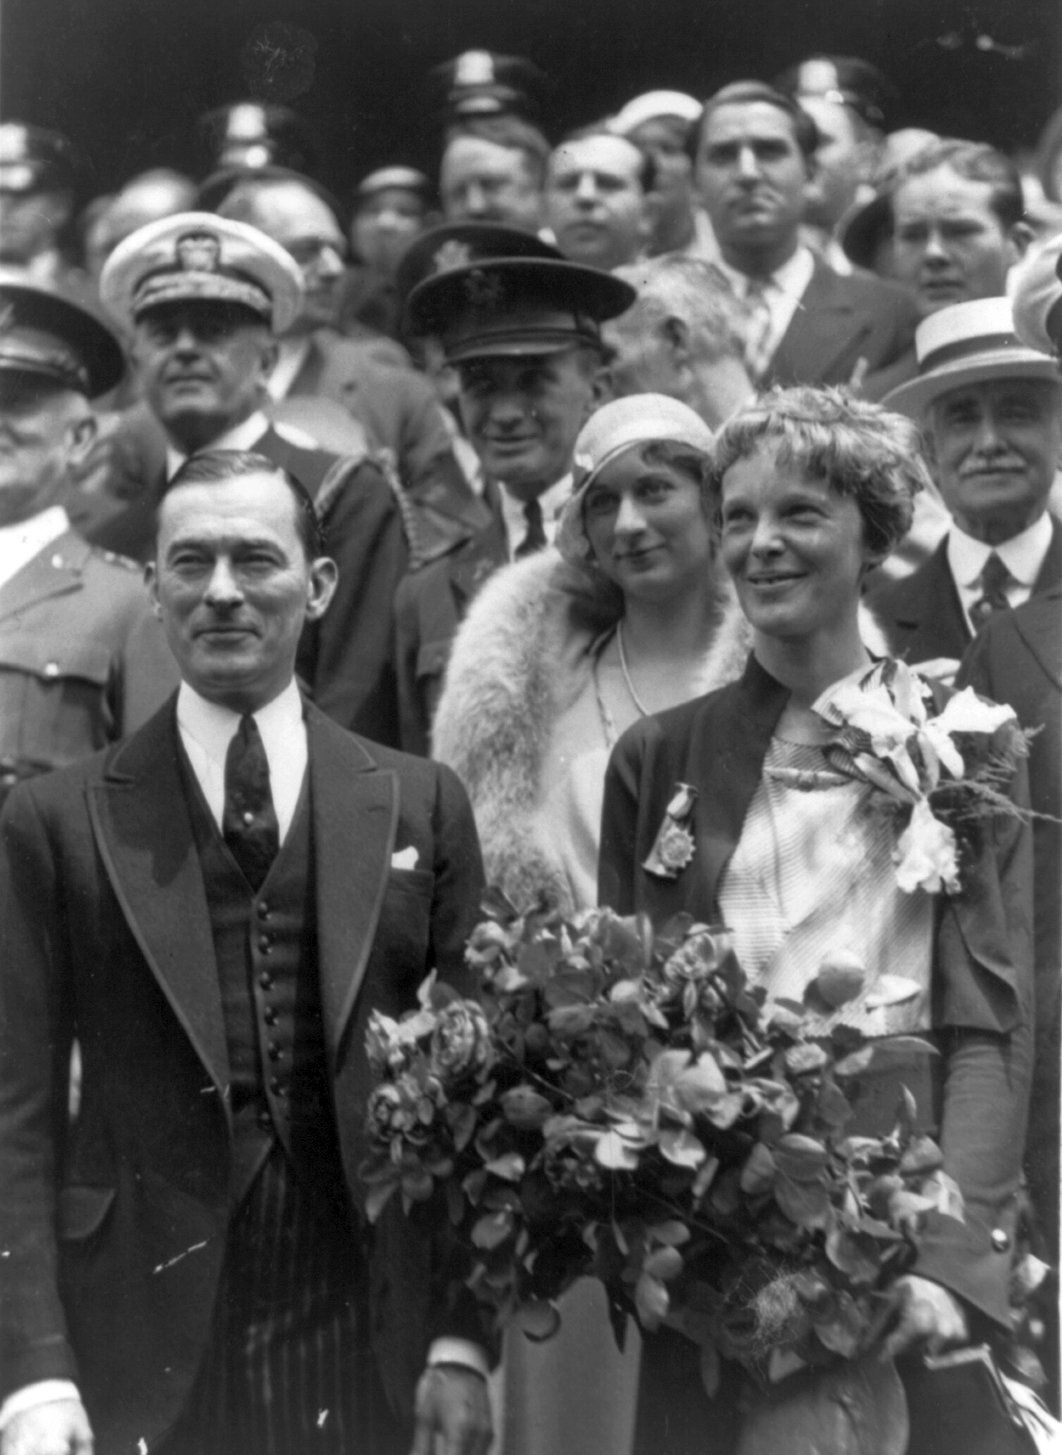 Amelia Earhart, 1898-1937, half-length portrait, standing with Mayor James Walker of New York holding roses